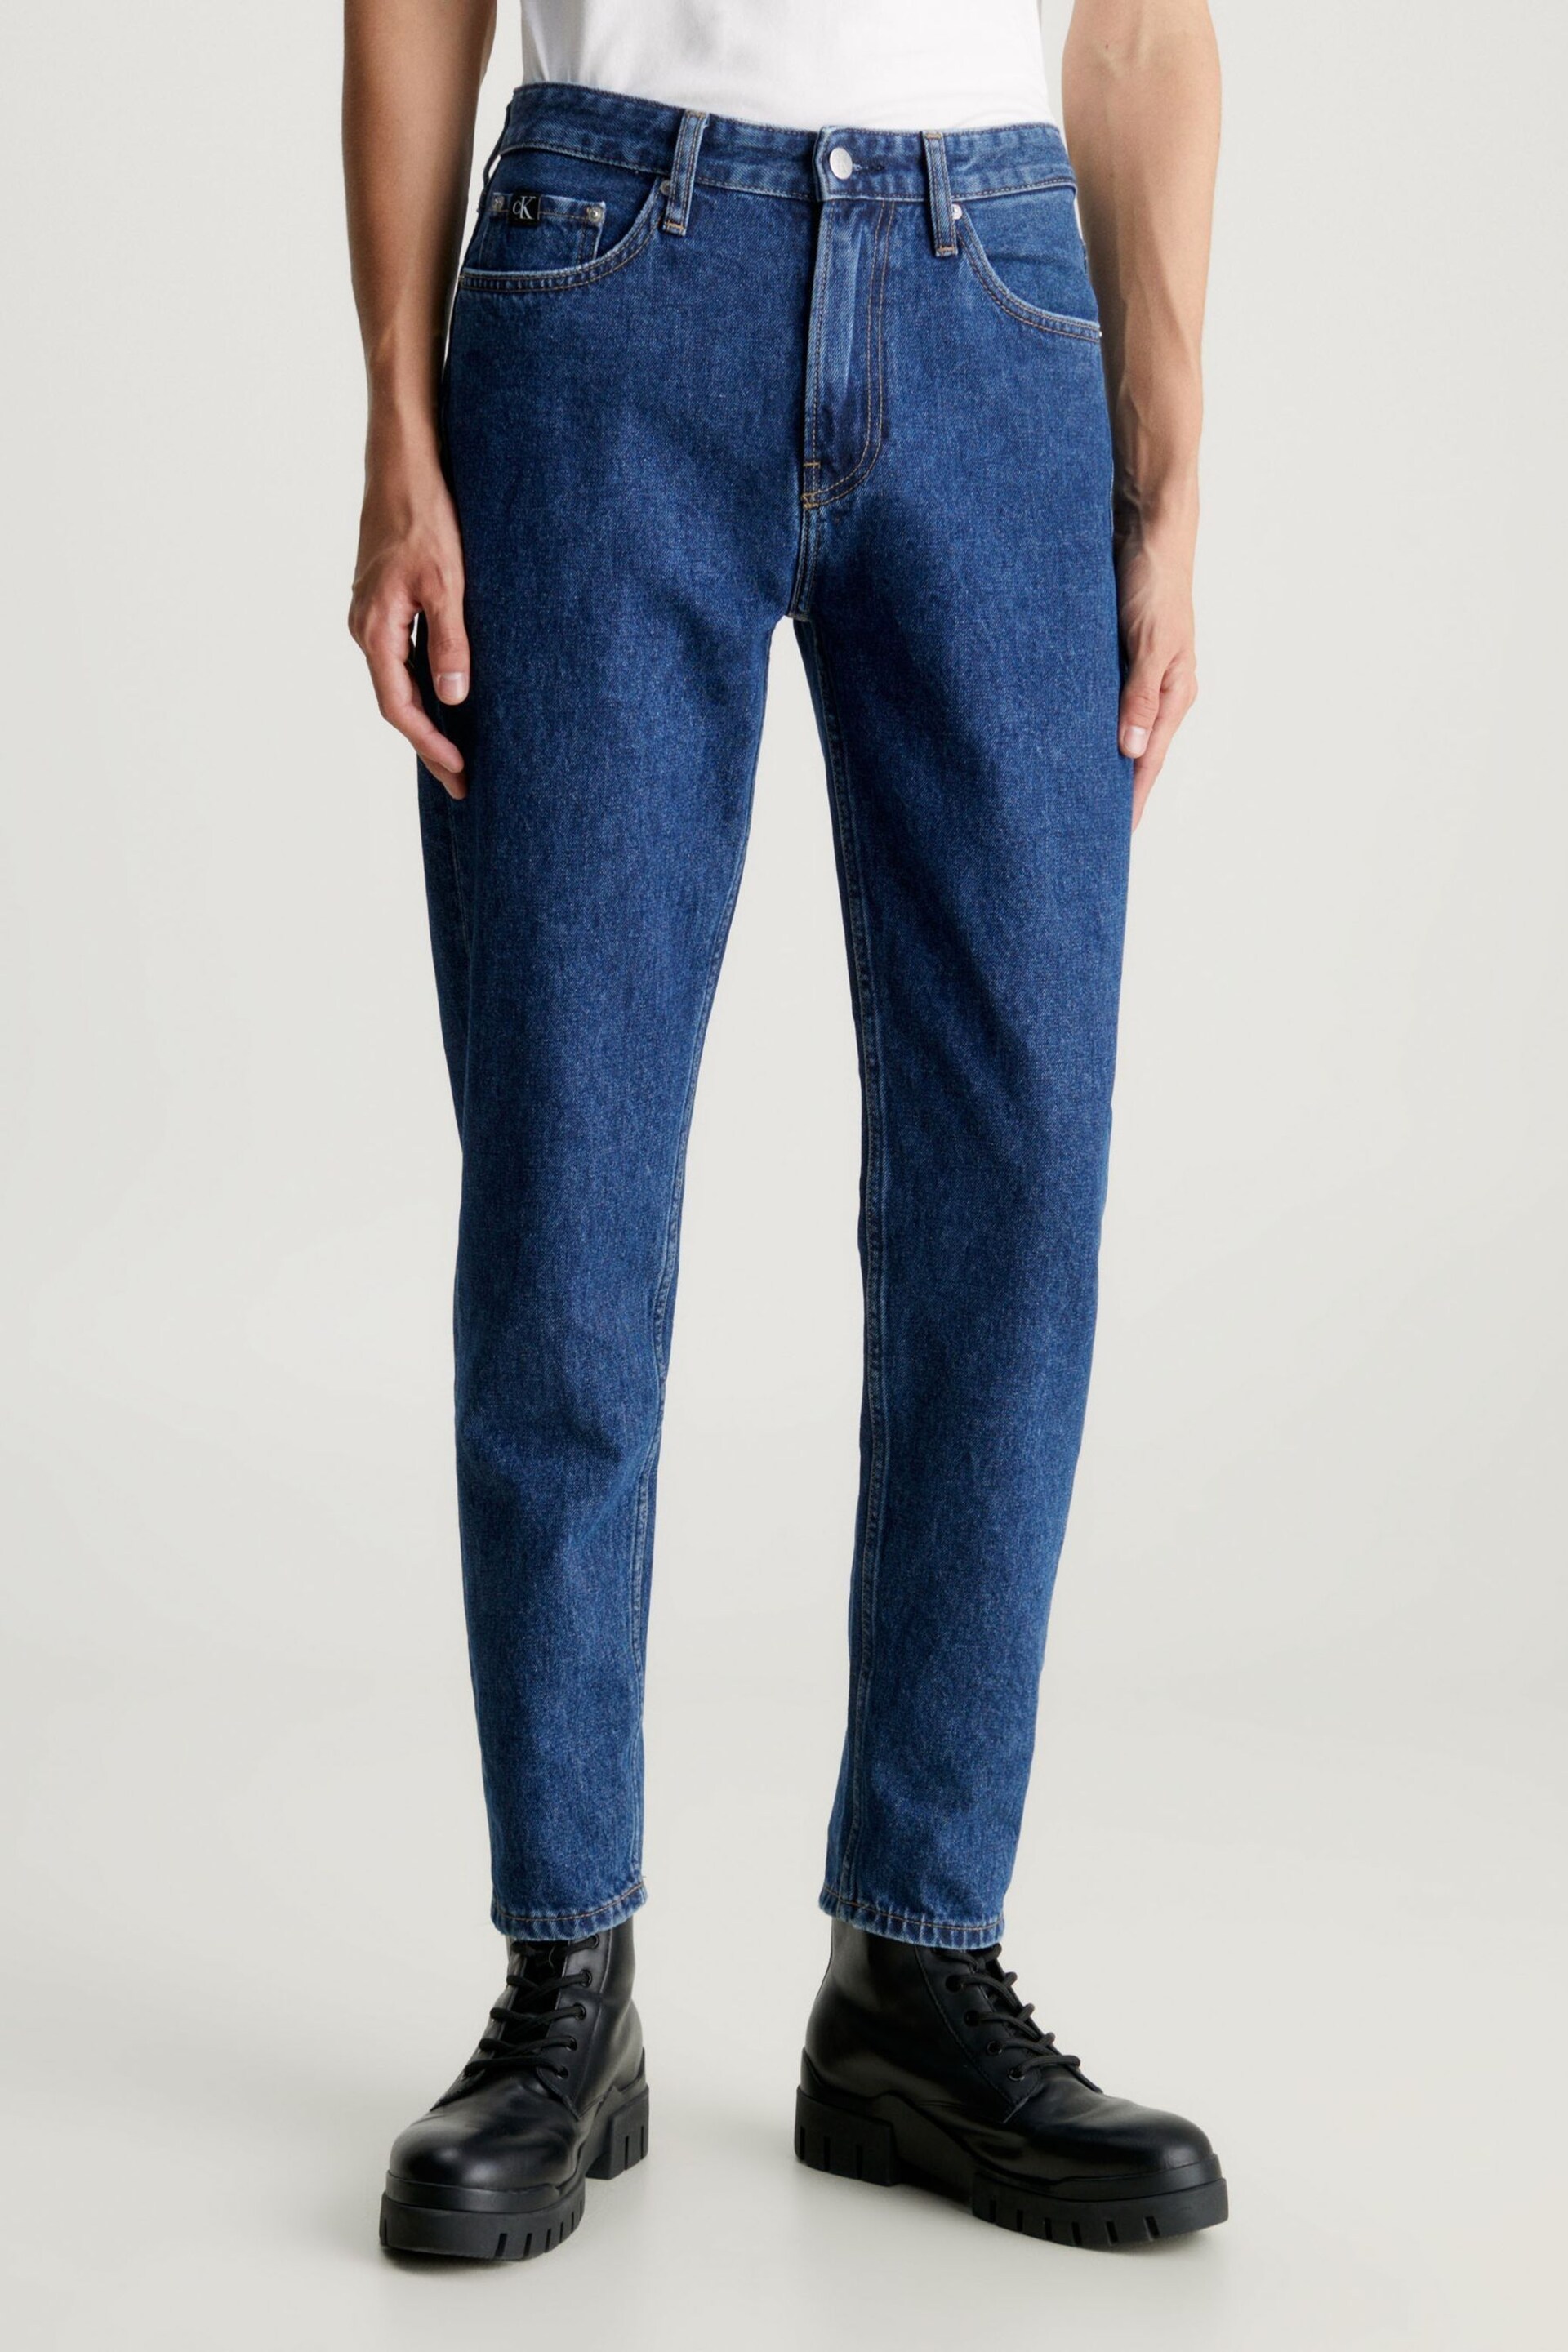 Calvin Klein Jeans Blue Regular Taper Jeans - Image 1 of 5